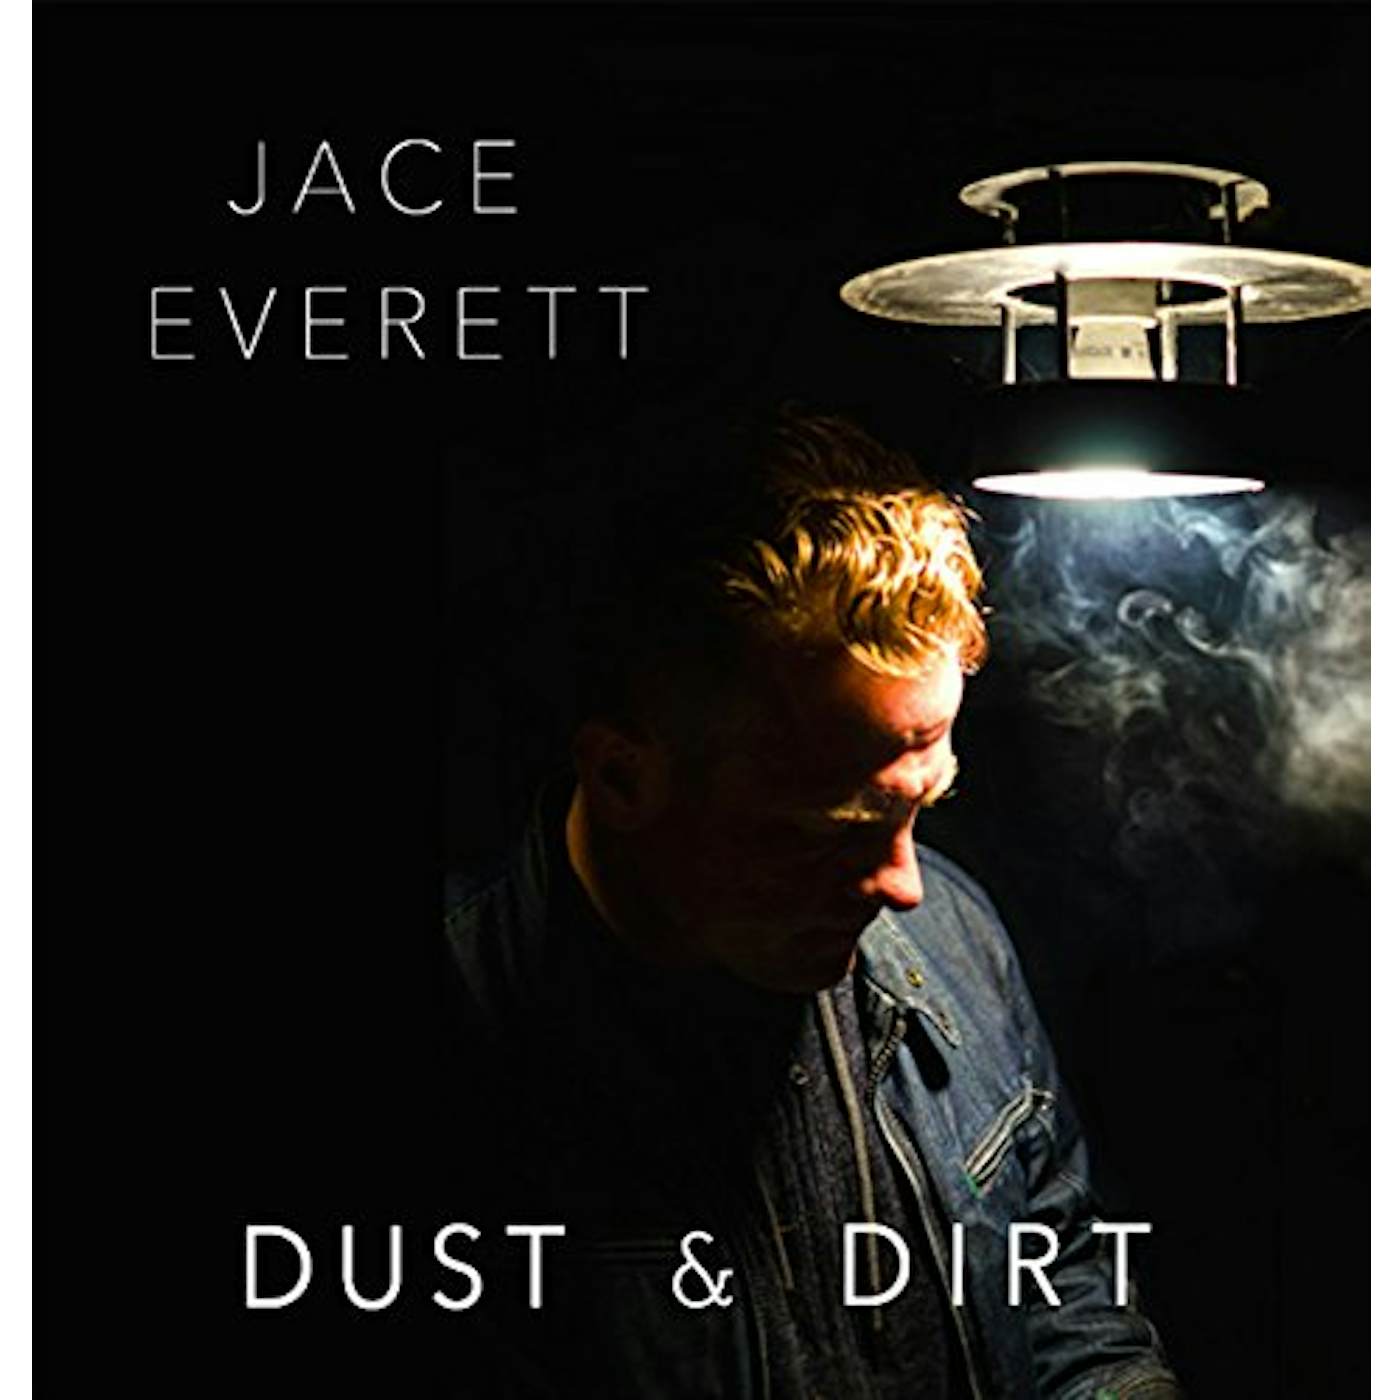 Jace Everett DUST & DIRT CD